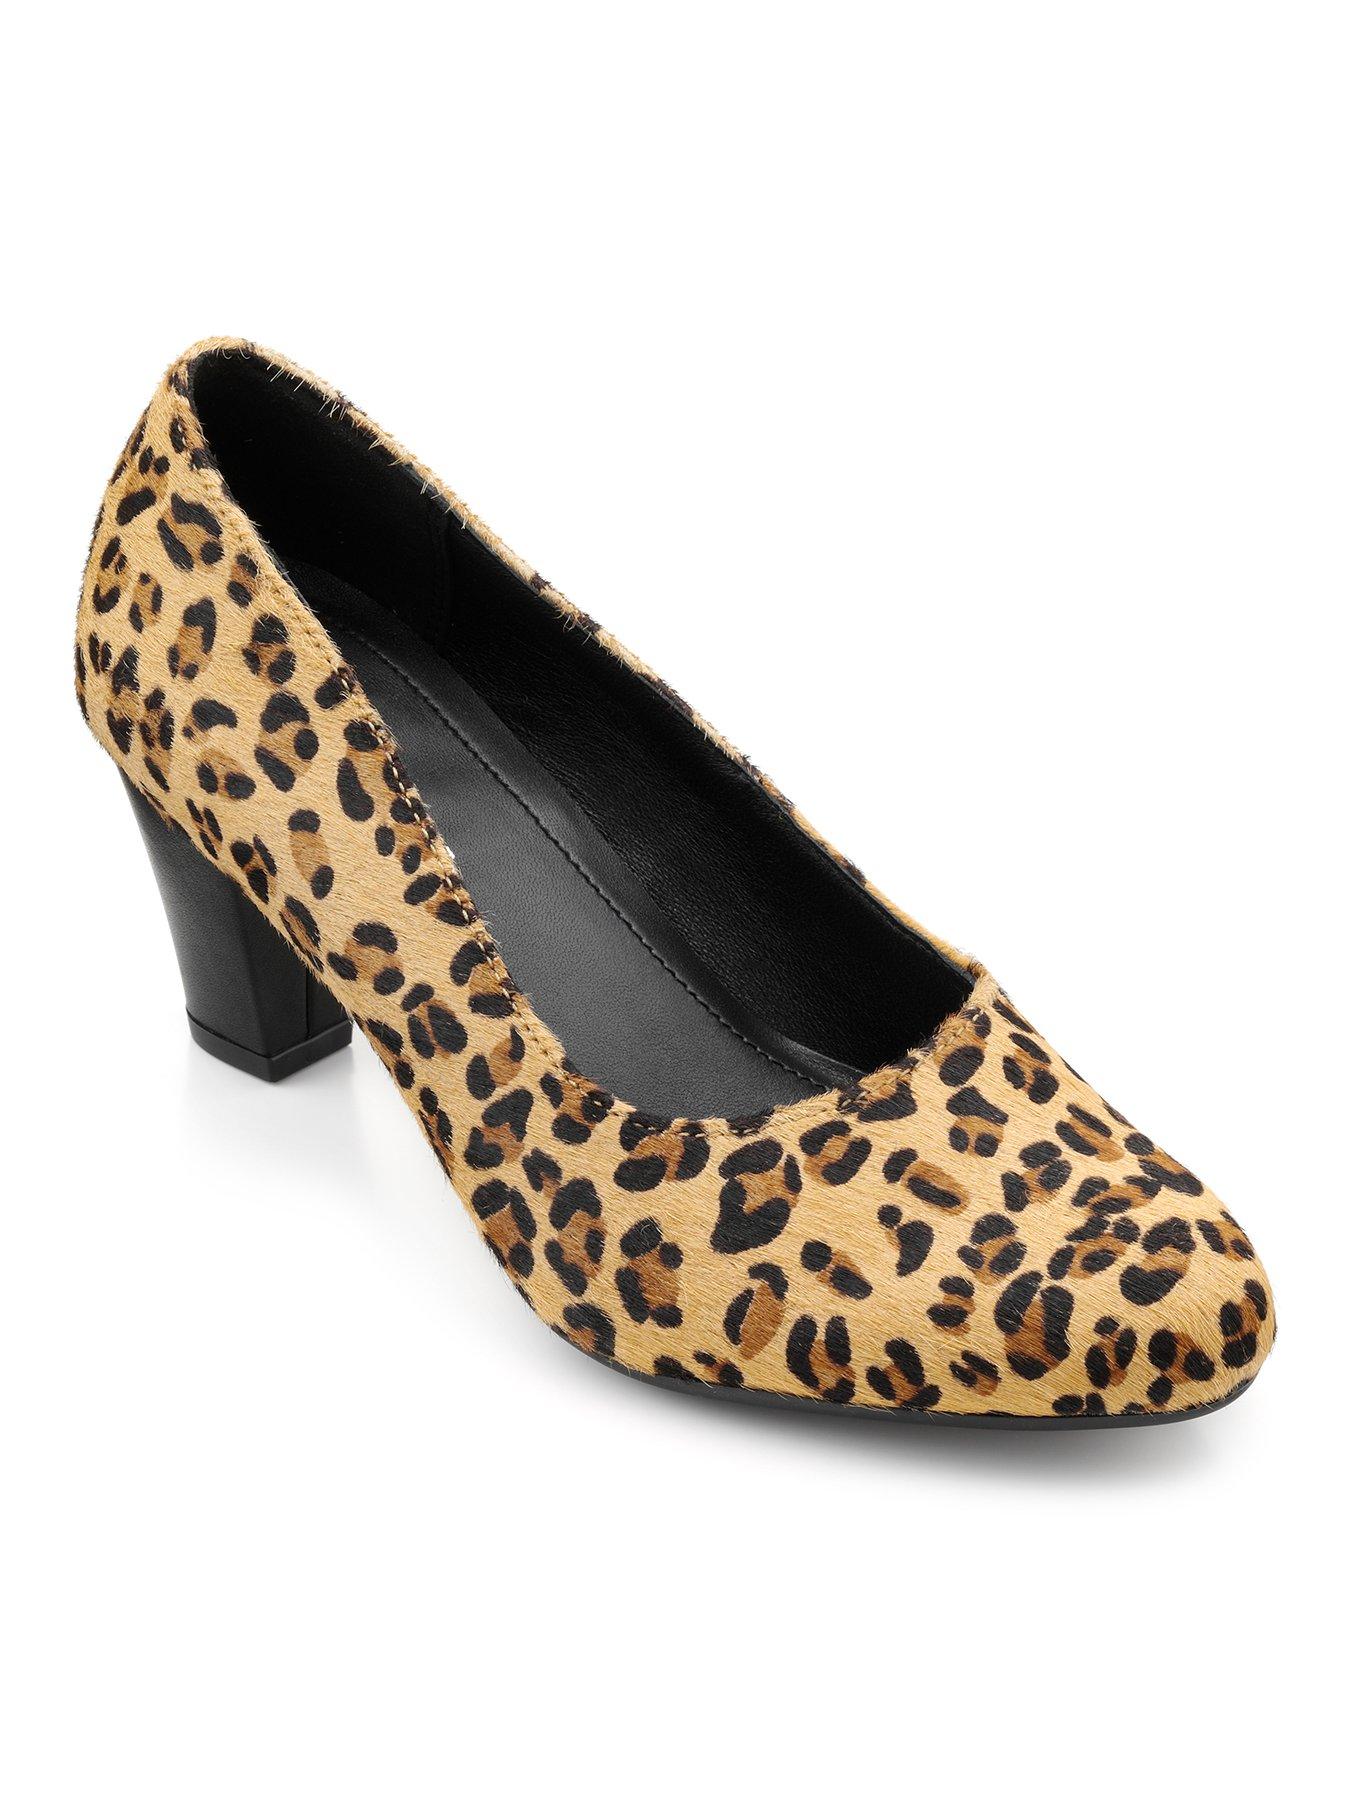 hotter leopard print shoes